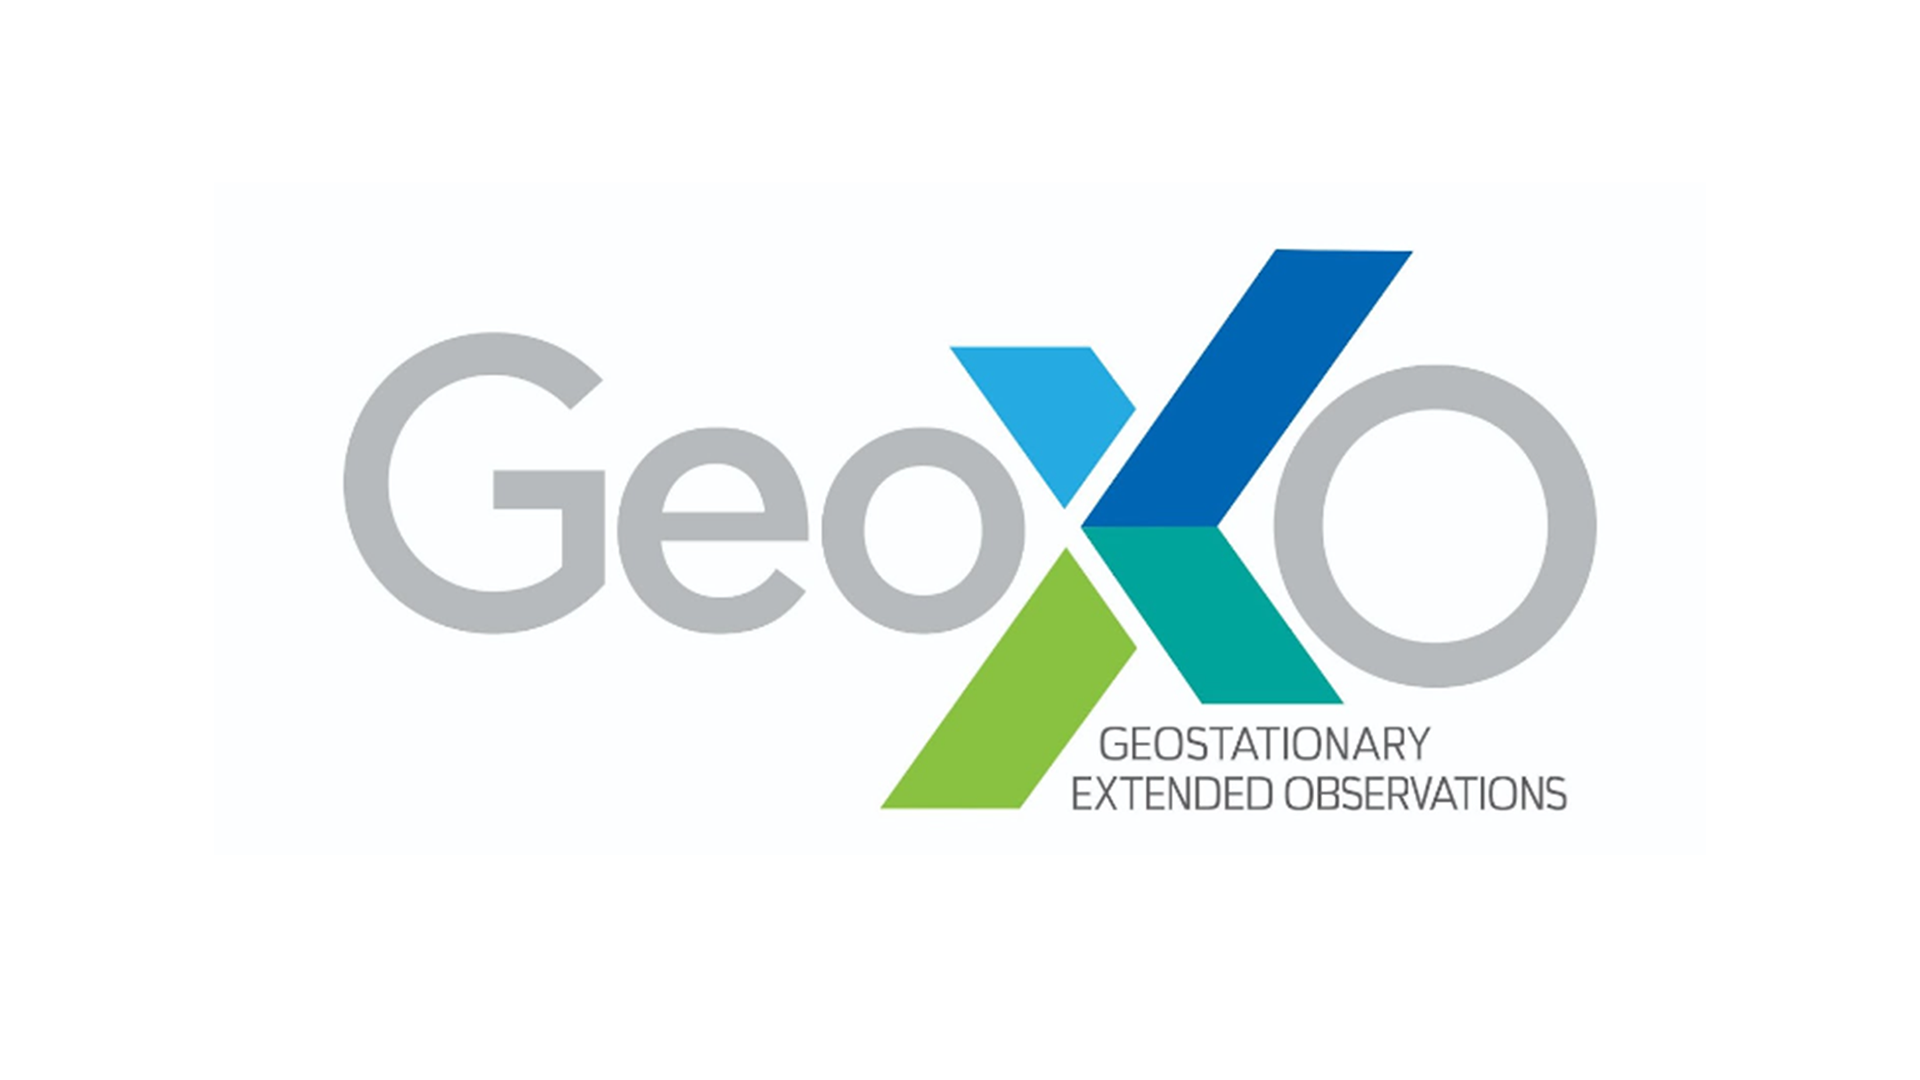 NOAA’s GeoXO Program Approved